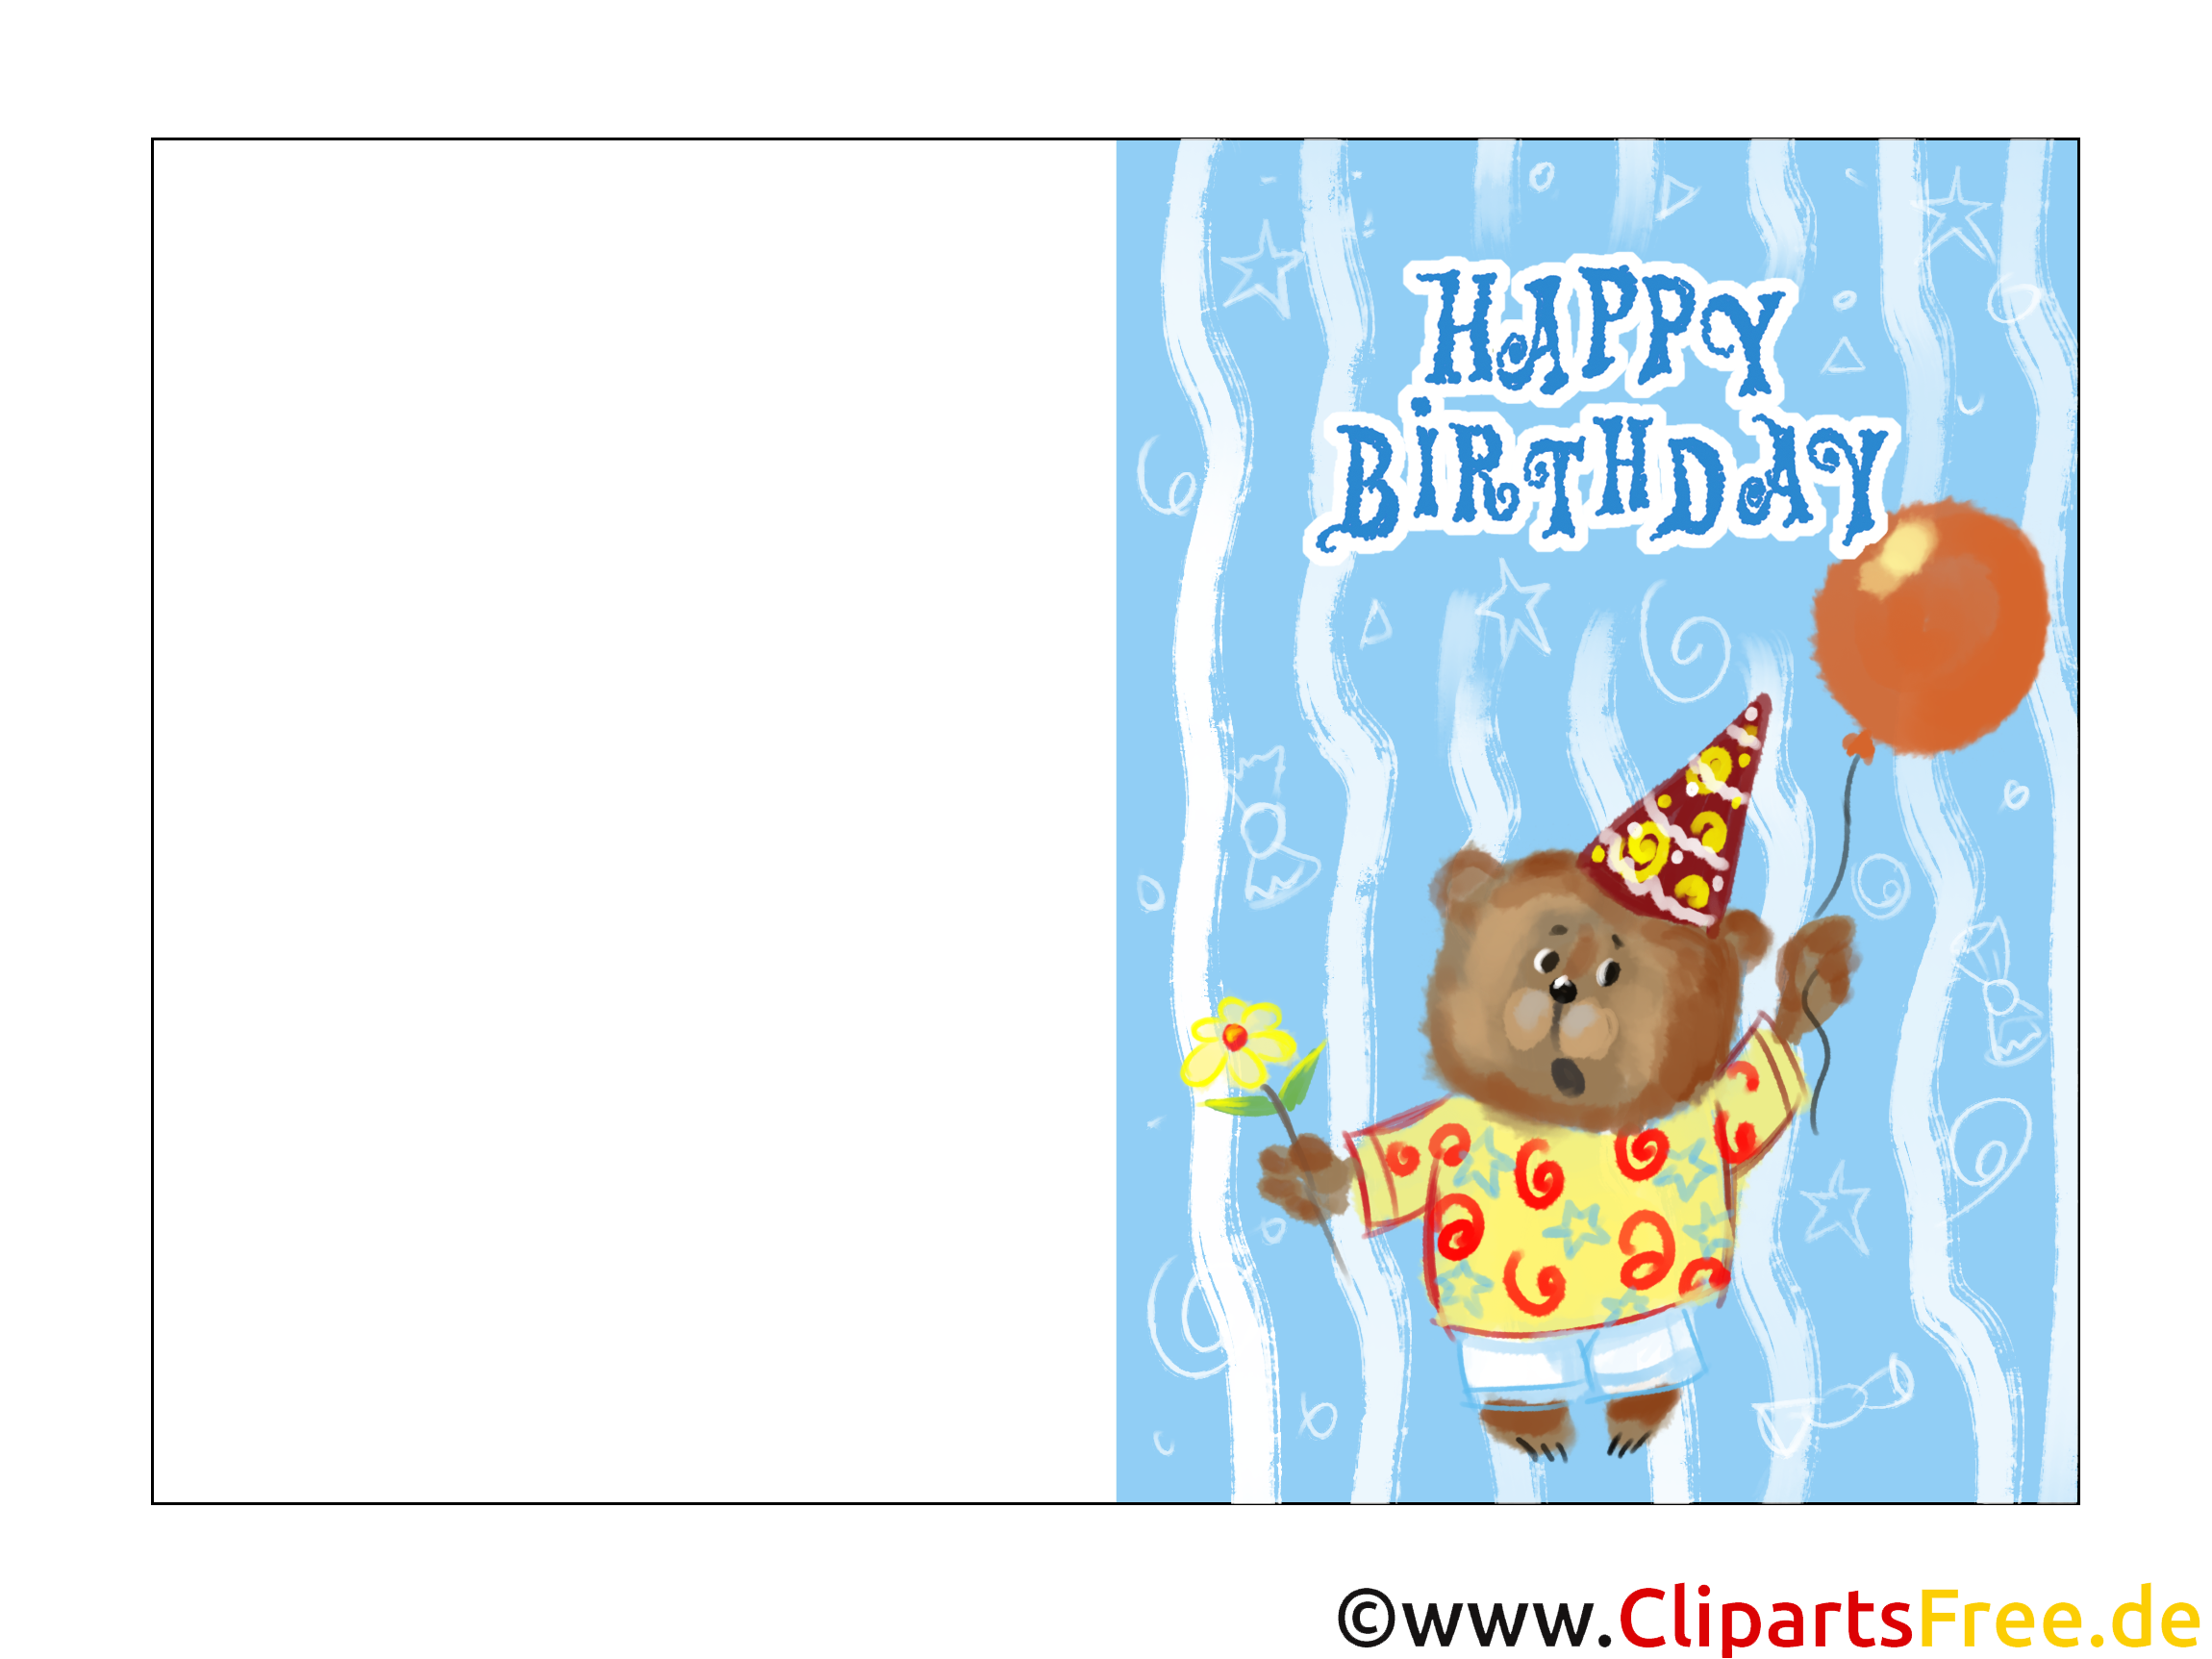 Happy Birthday Karten kostenlos